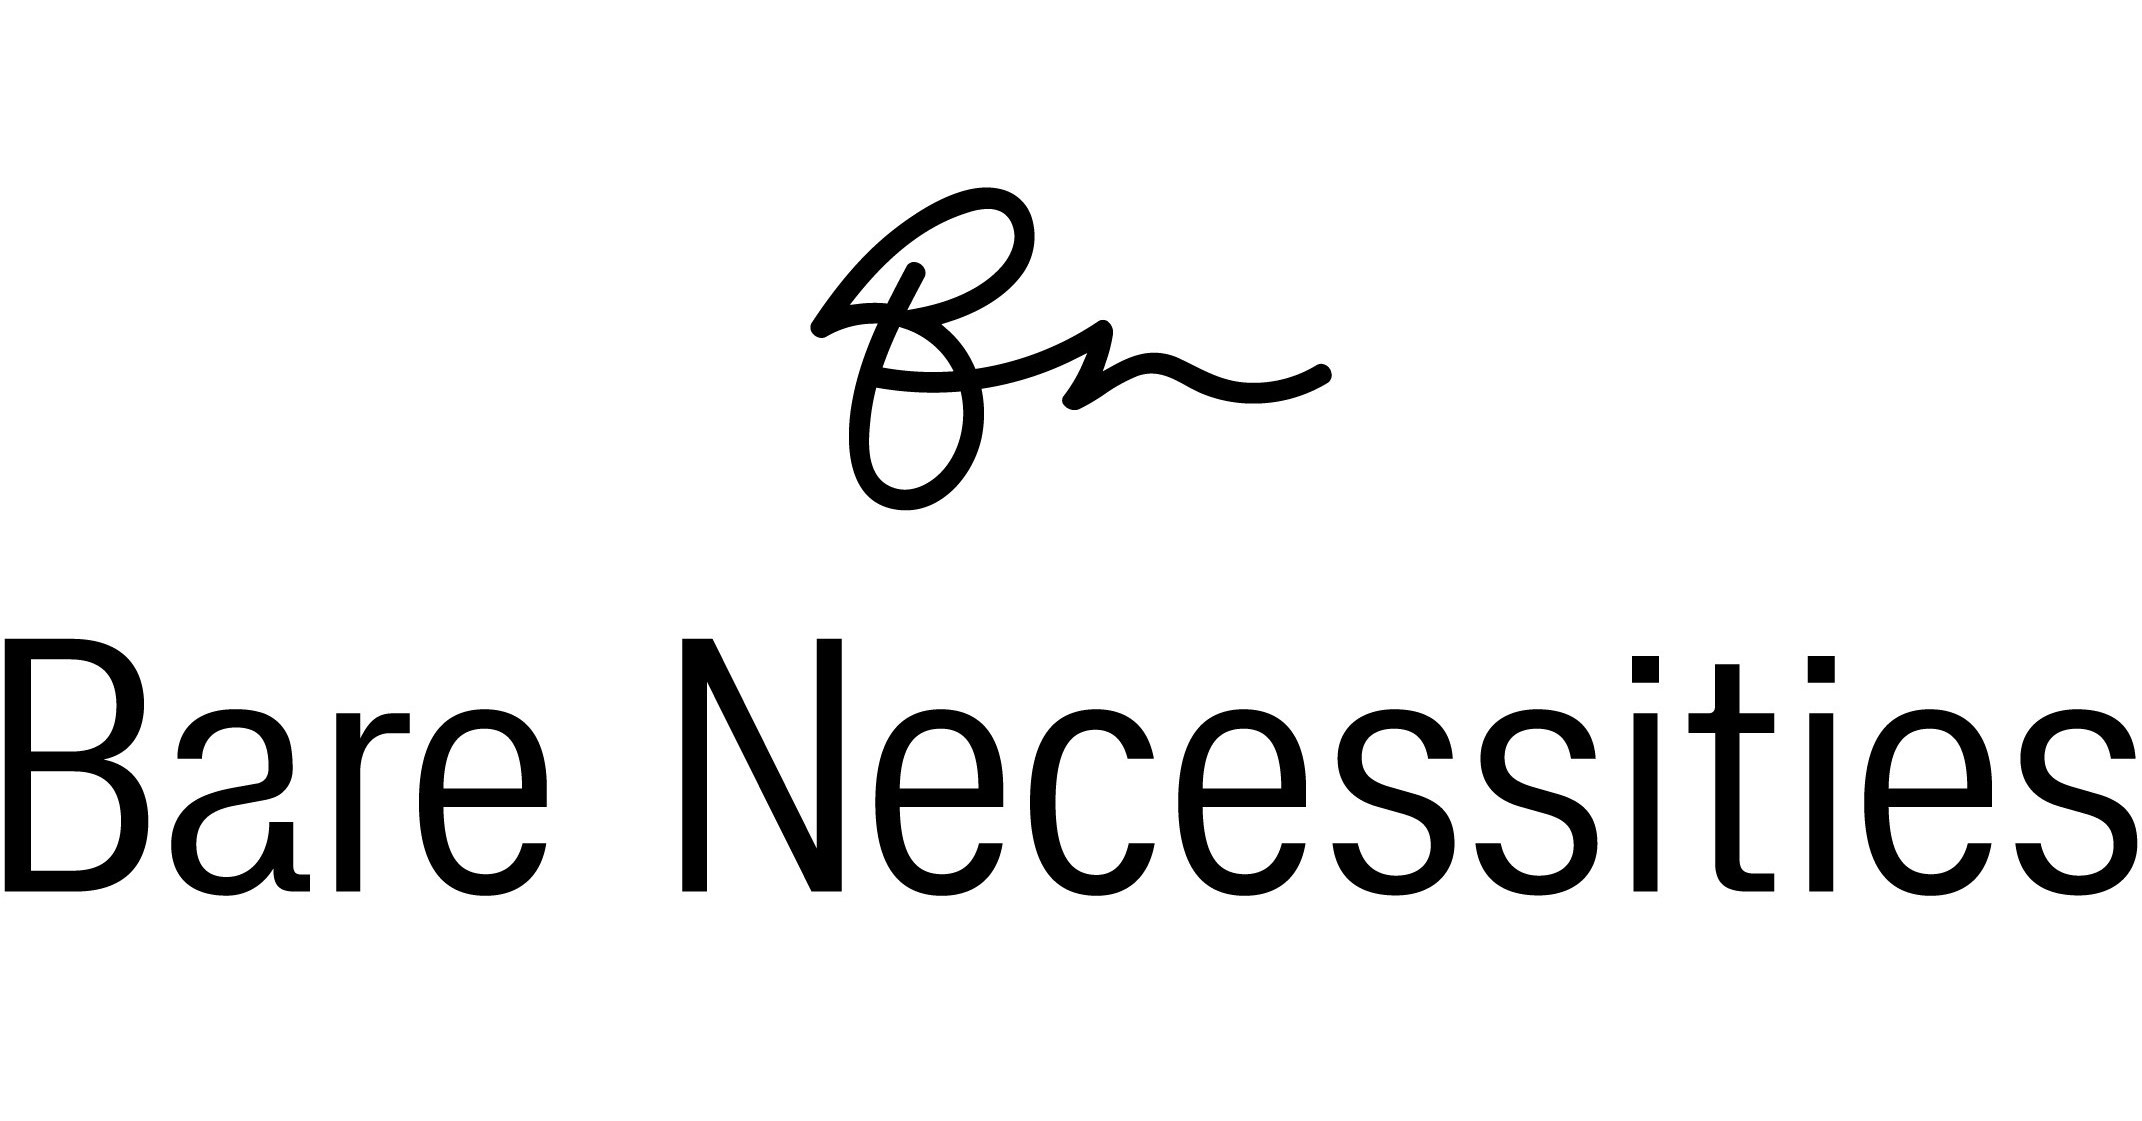 https://mma.prnewswire.com/media/1901019/Bare_Necessities_Logo.jpg?p=facebook